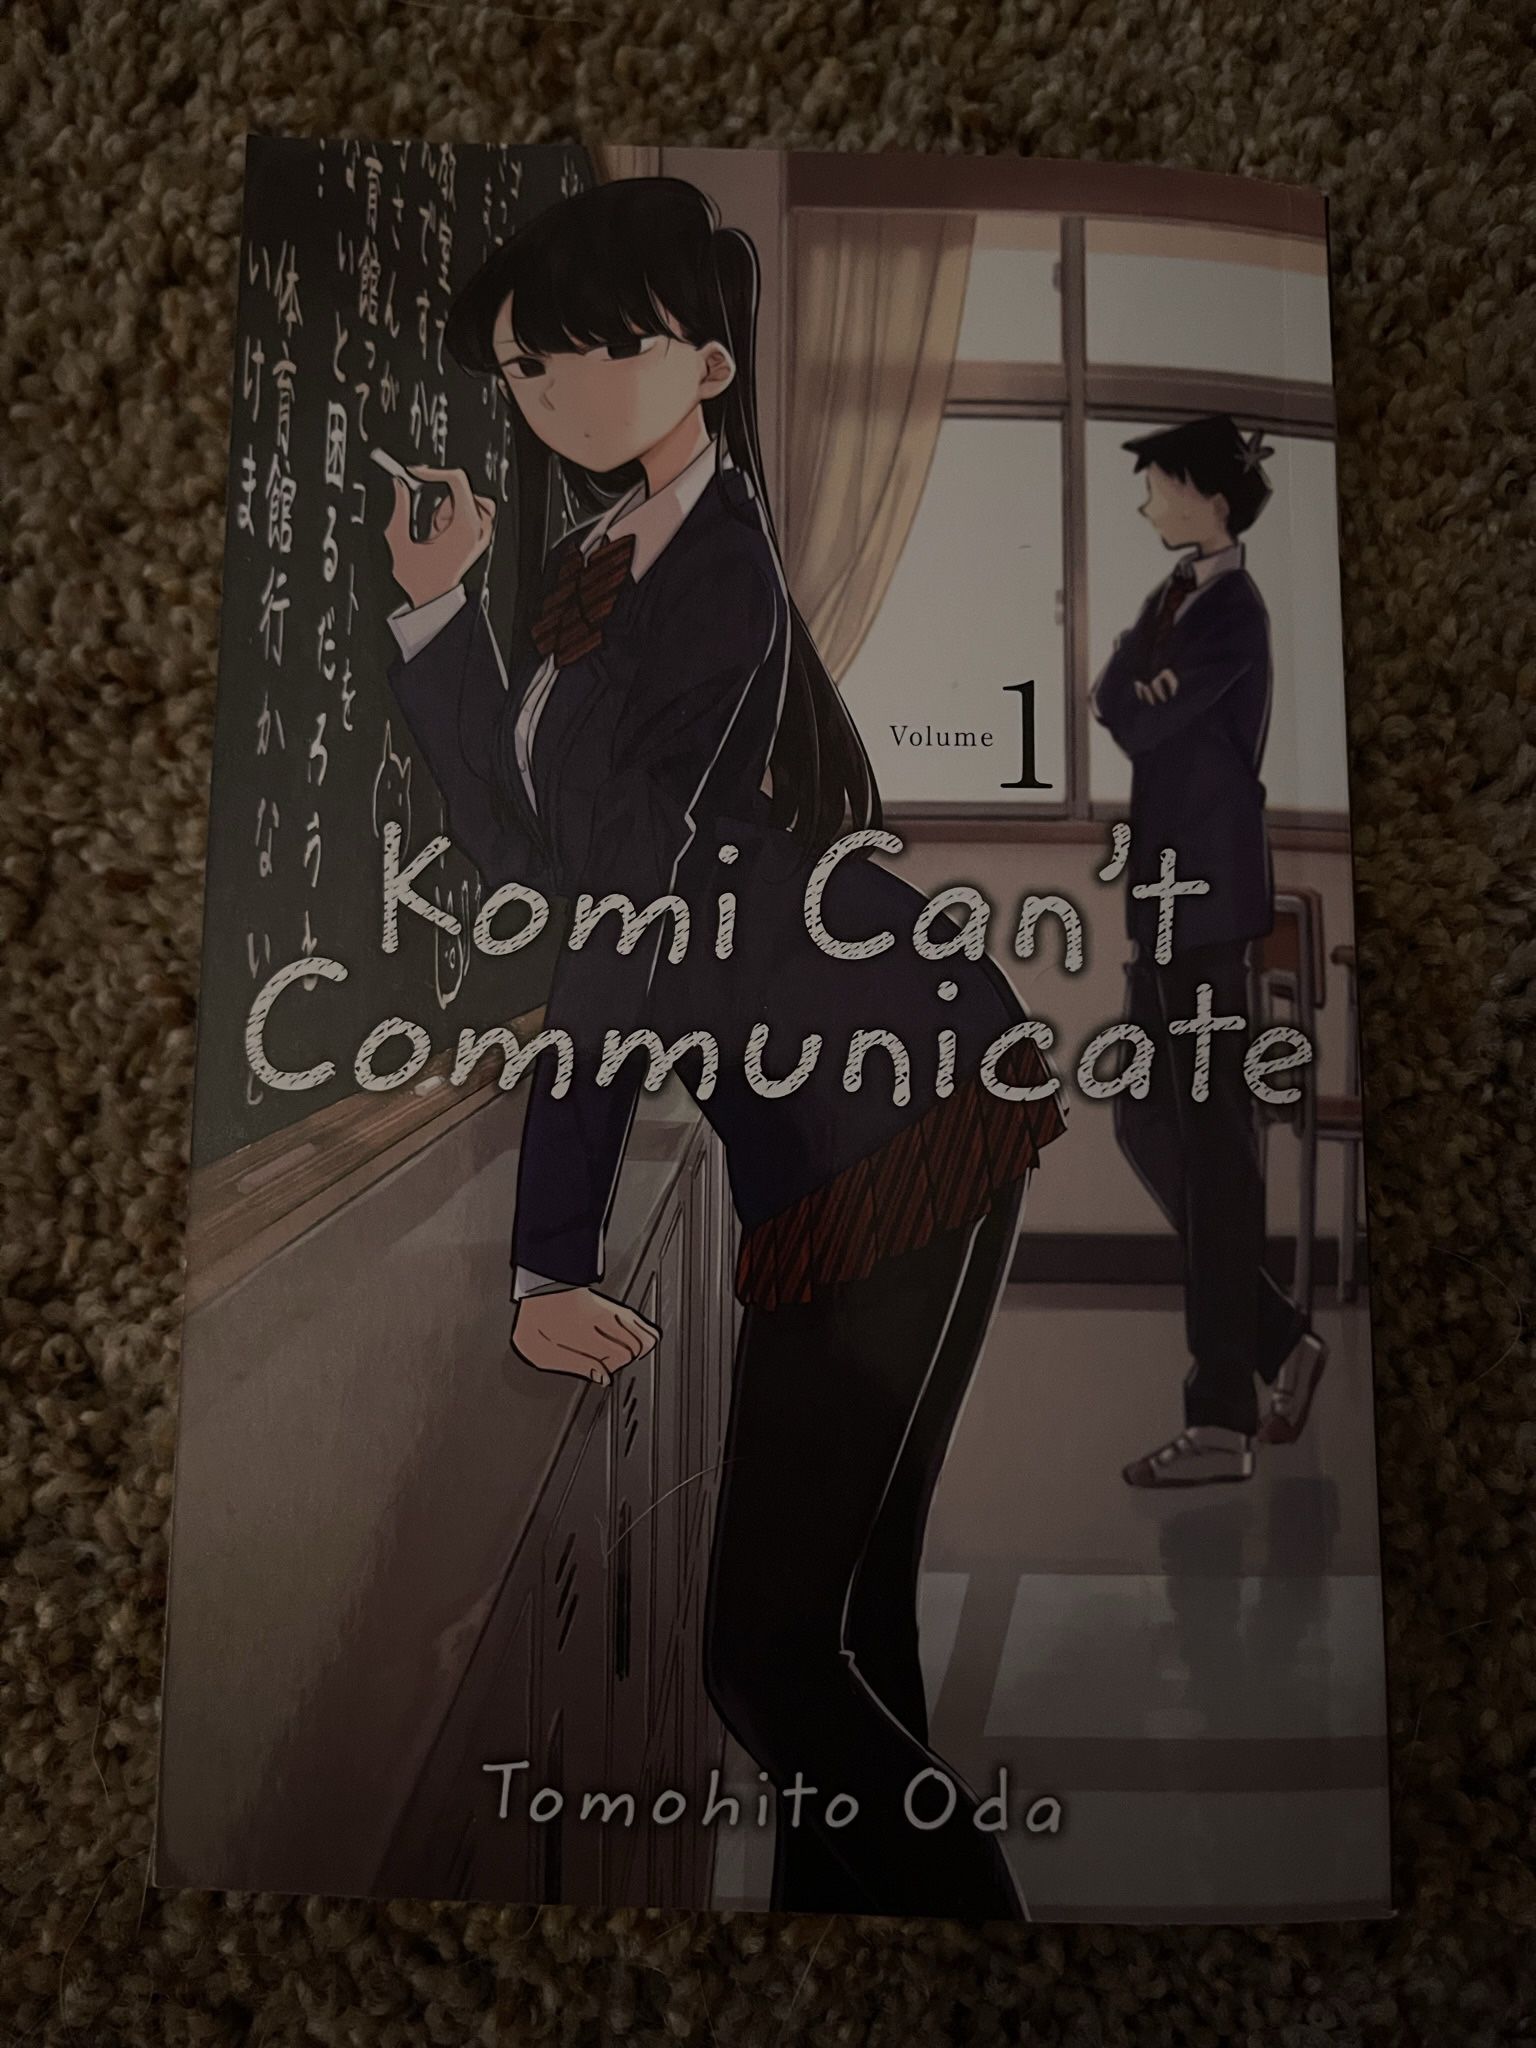 Komi Can’t Communicate